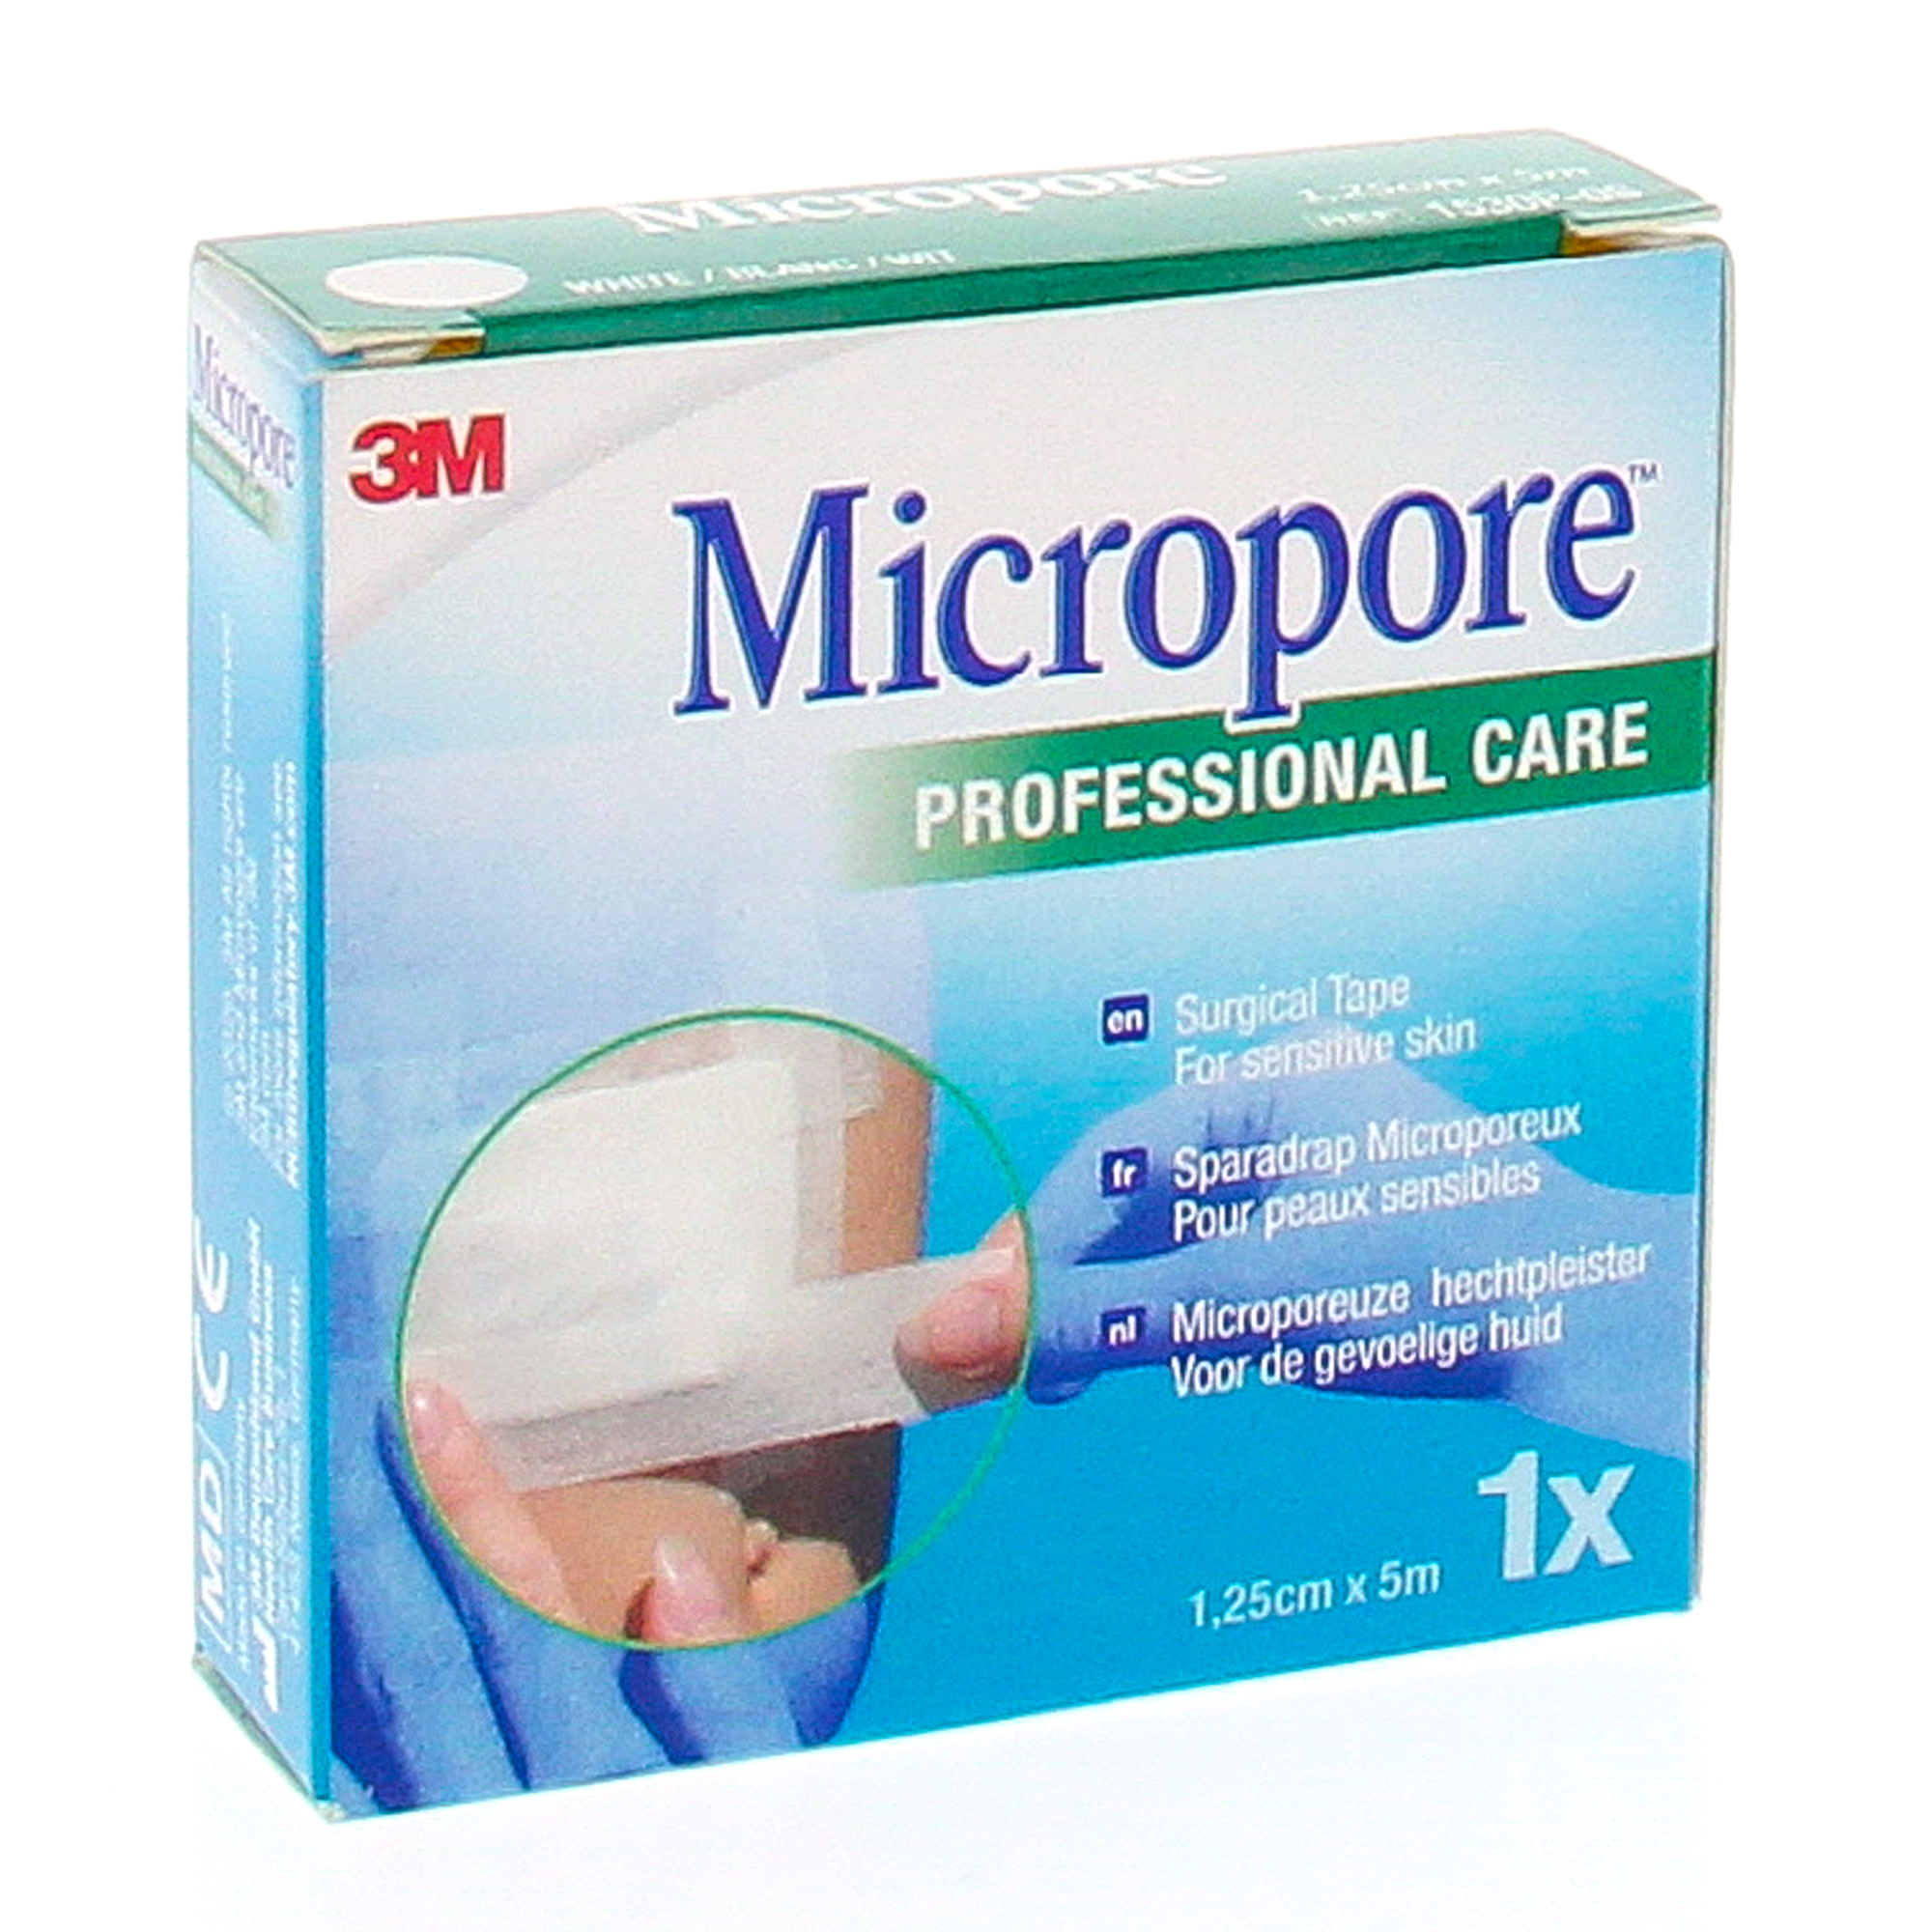 https://www.pharmacie-prado-mermoz.com/client/840002/media/files/MICROPORE-Professional-care-Sparadrap-microporeux-97189_101_1635962442.jpg